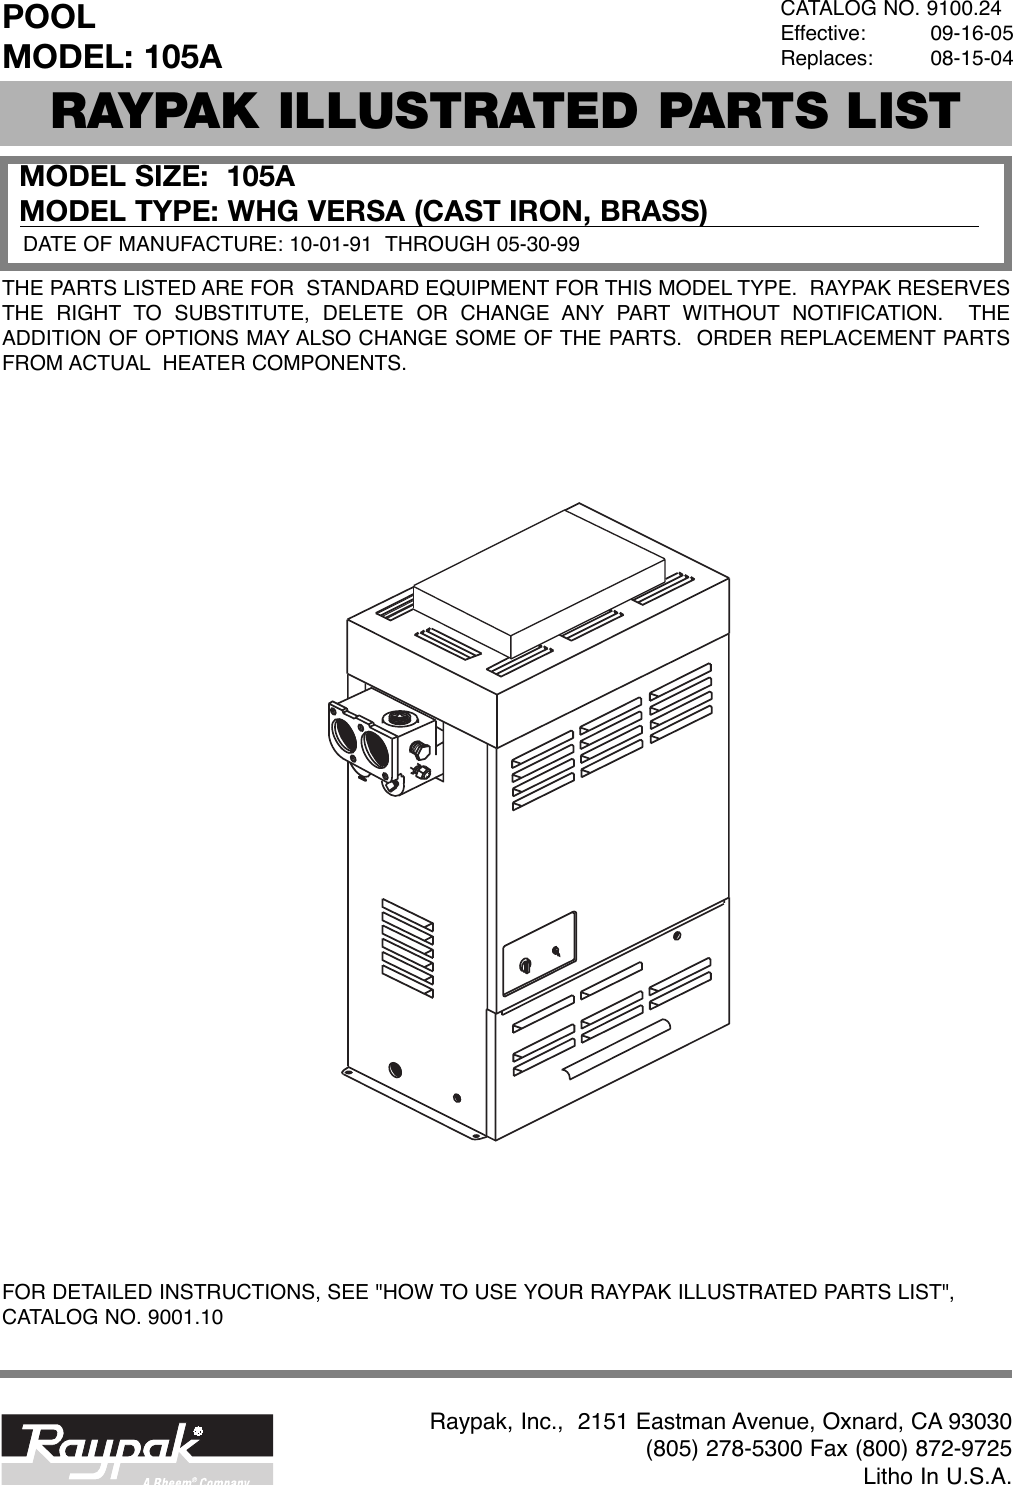 Page 1 of 4 - Raypak Raypak-105A-Users-Manual- 9100.24(105A)  Raypak-105a-users-manual